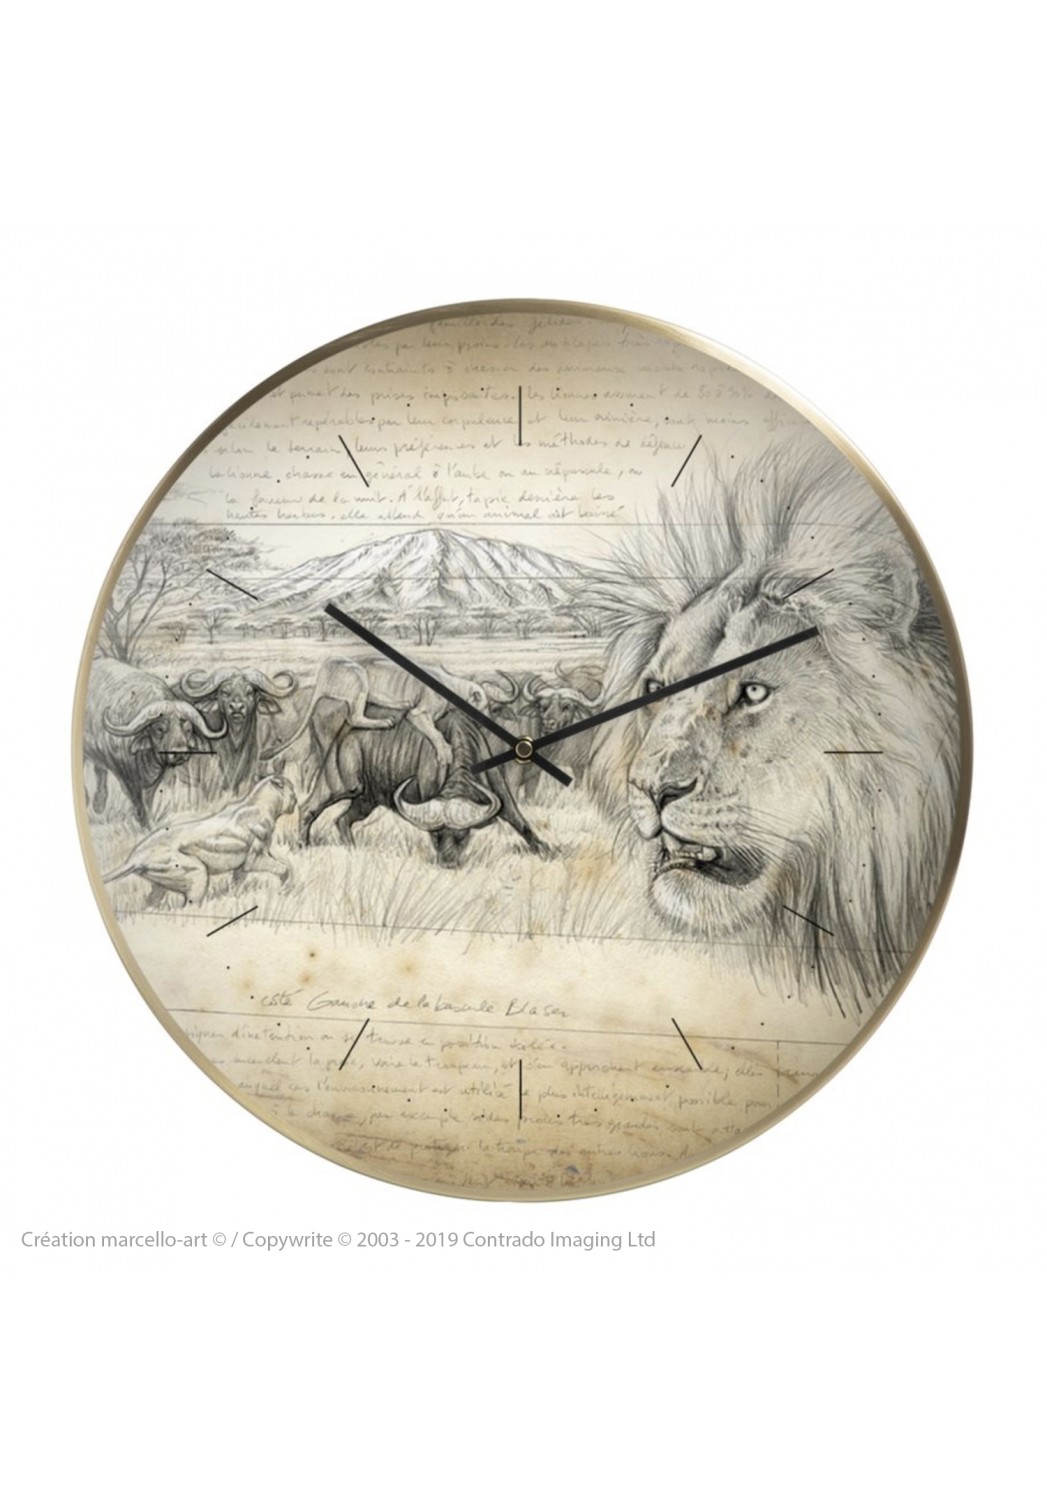 Marcello-art: Decoration accessoiries Wall clock 275 Lion Engraving gun